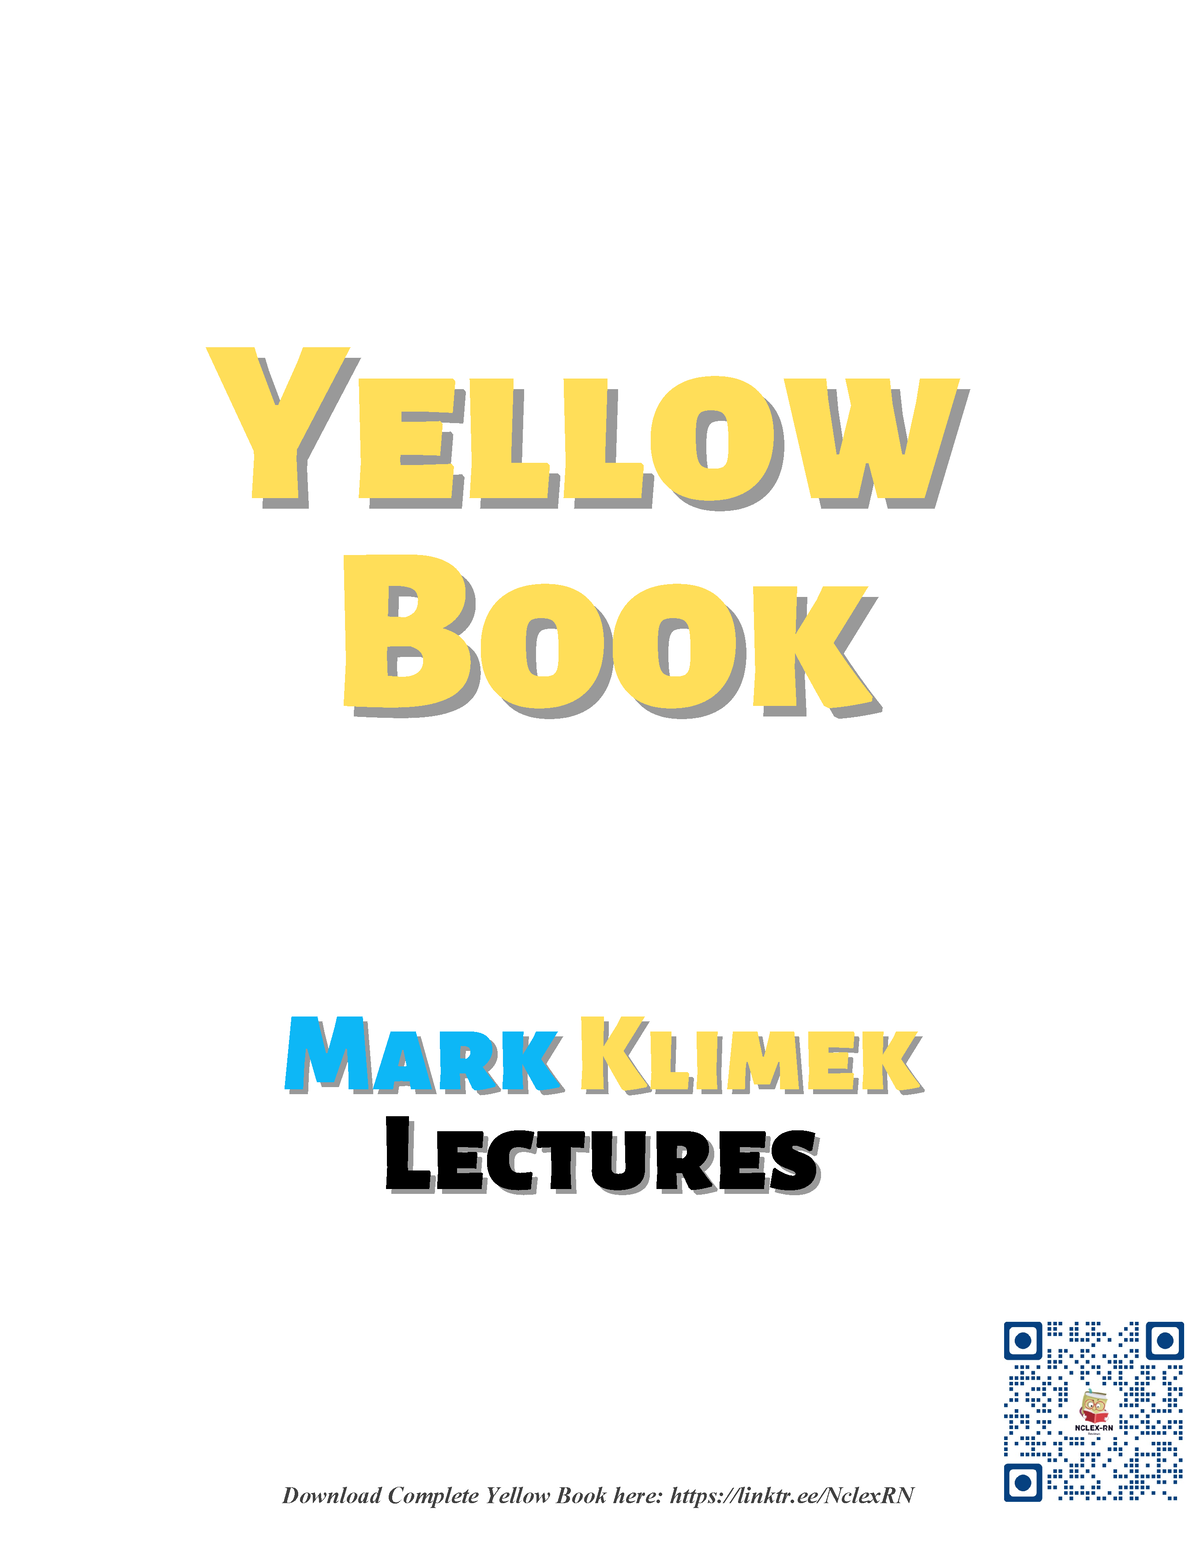 Mark Klimek Yellow Book Nclex Review Lectures YellowYellow Book